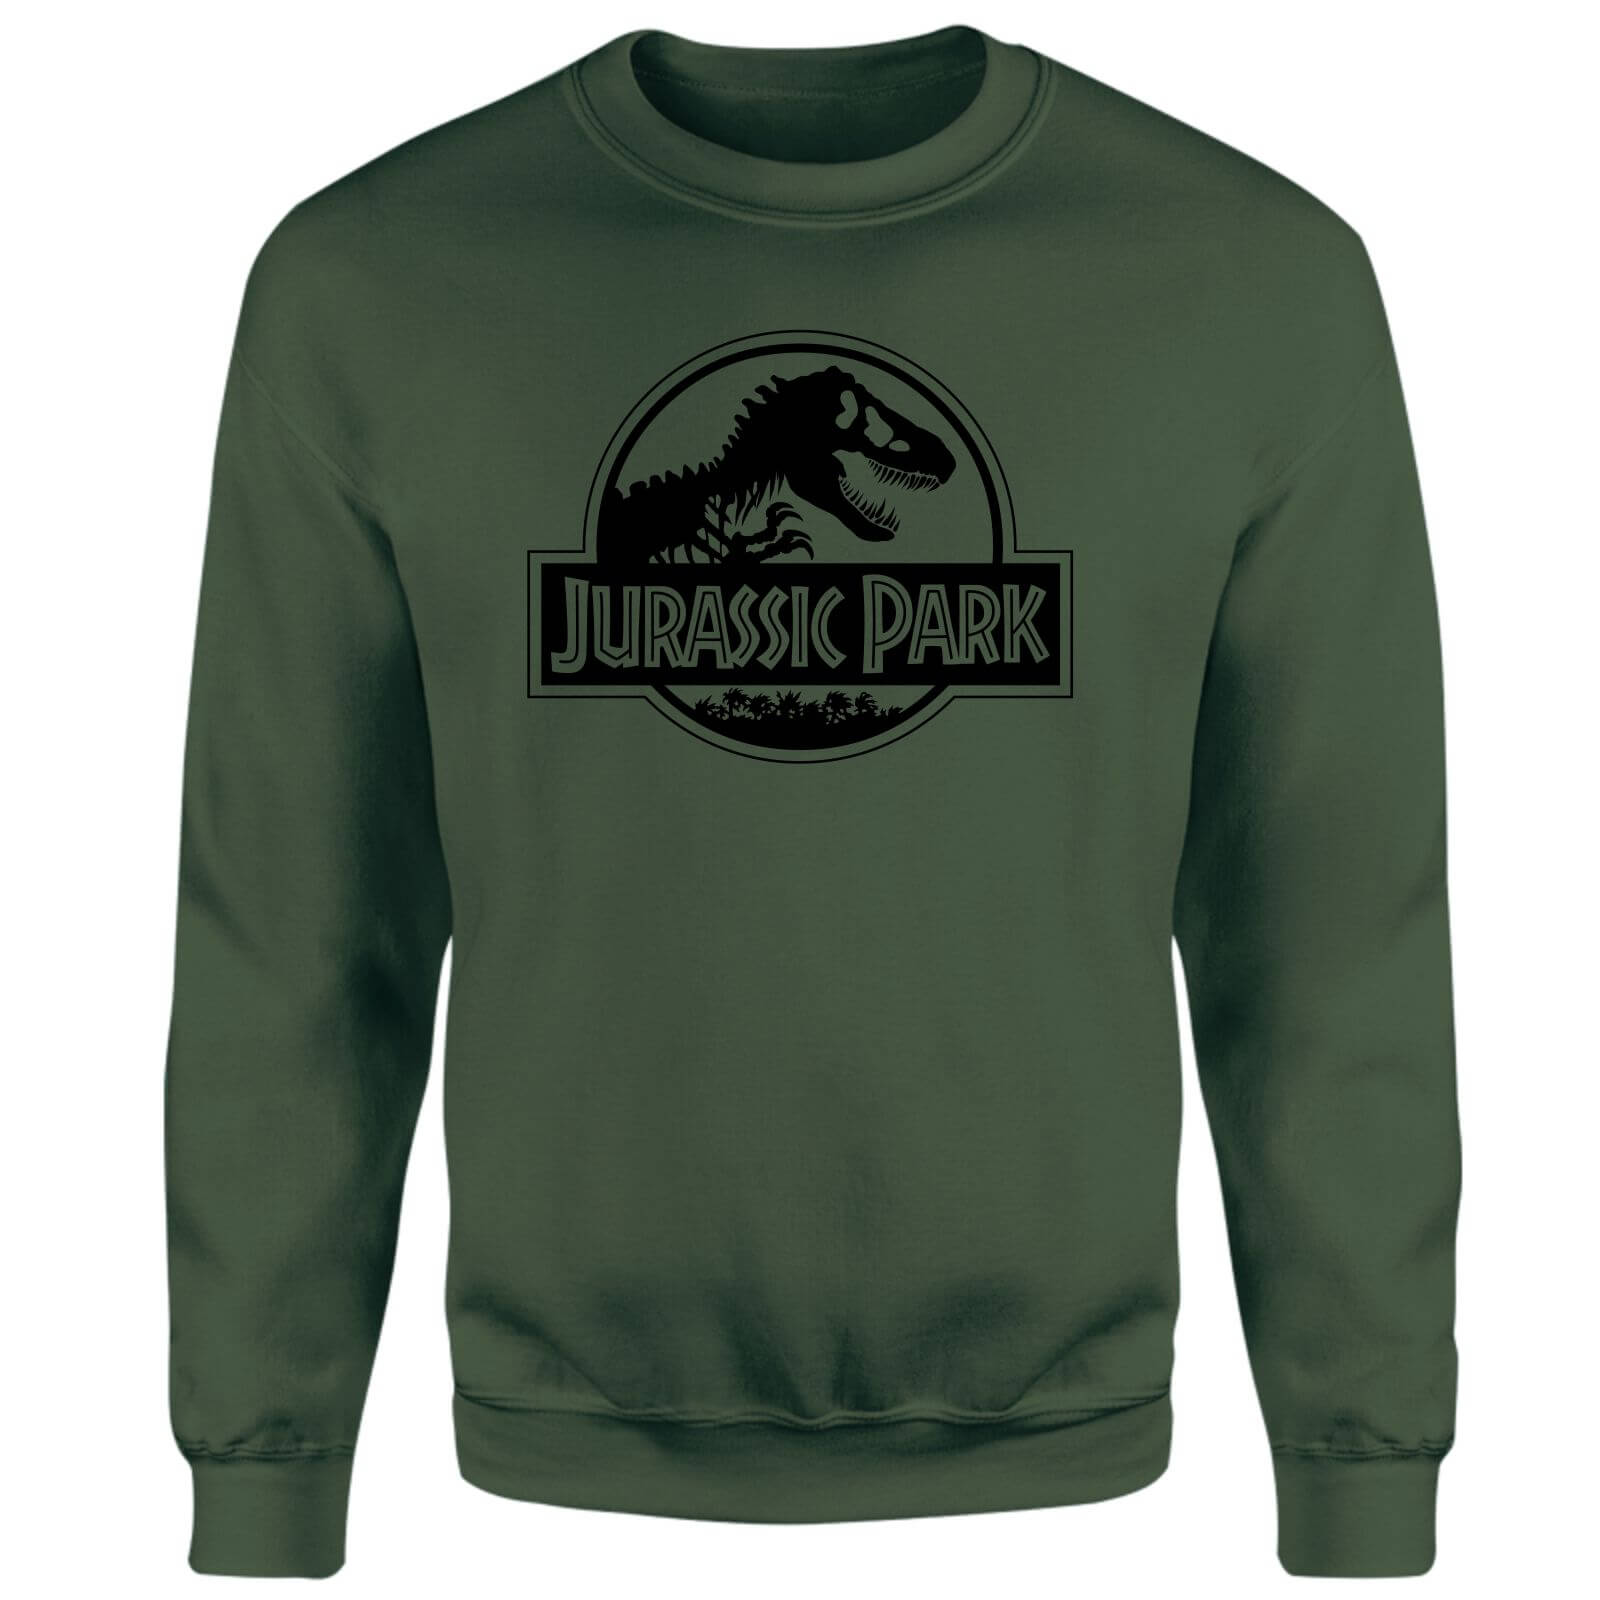 Jurassic Park Logo Sweatshirt - Green - S - Green